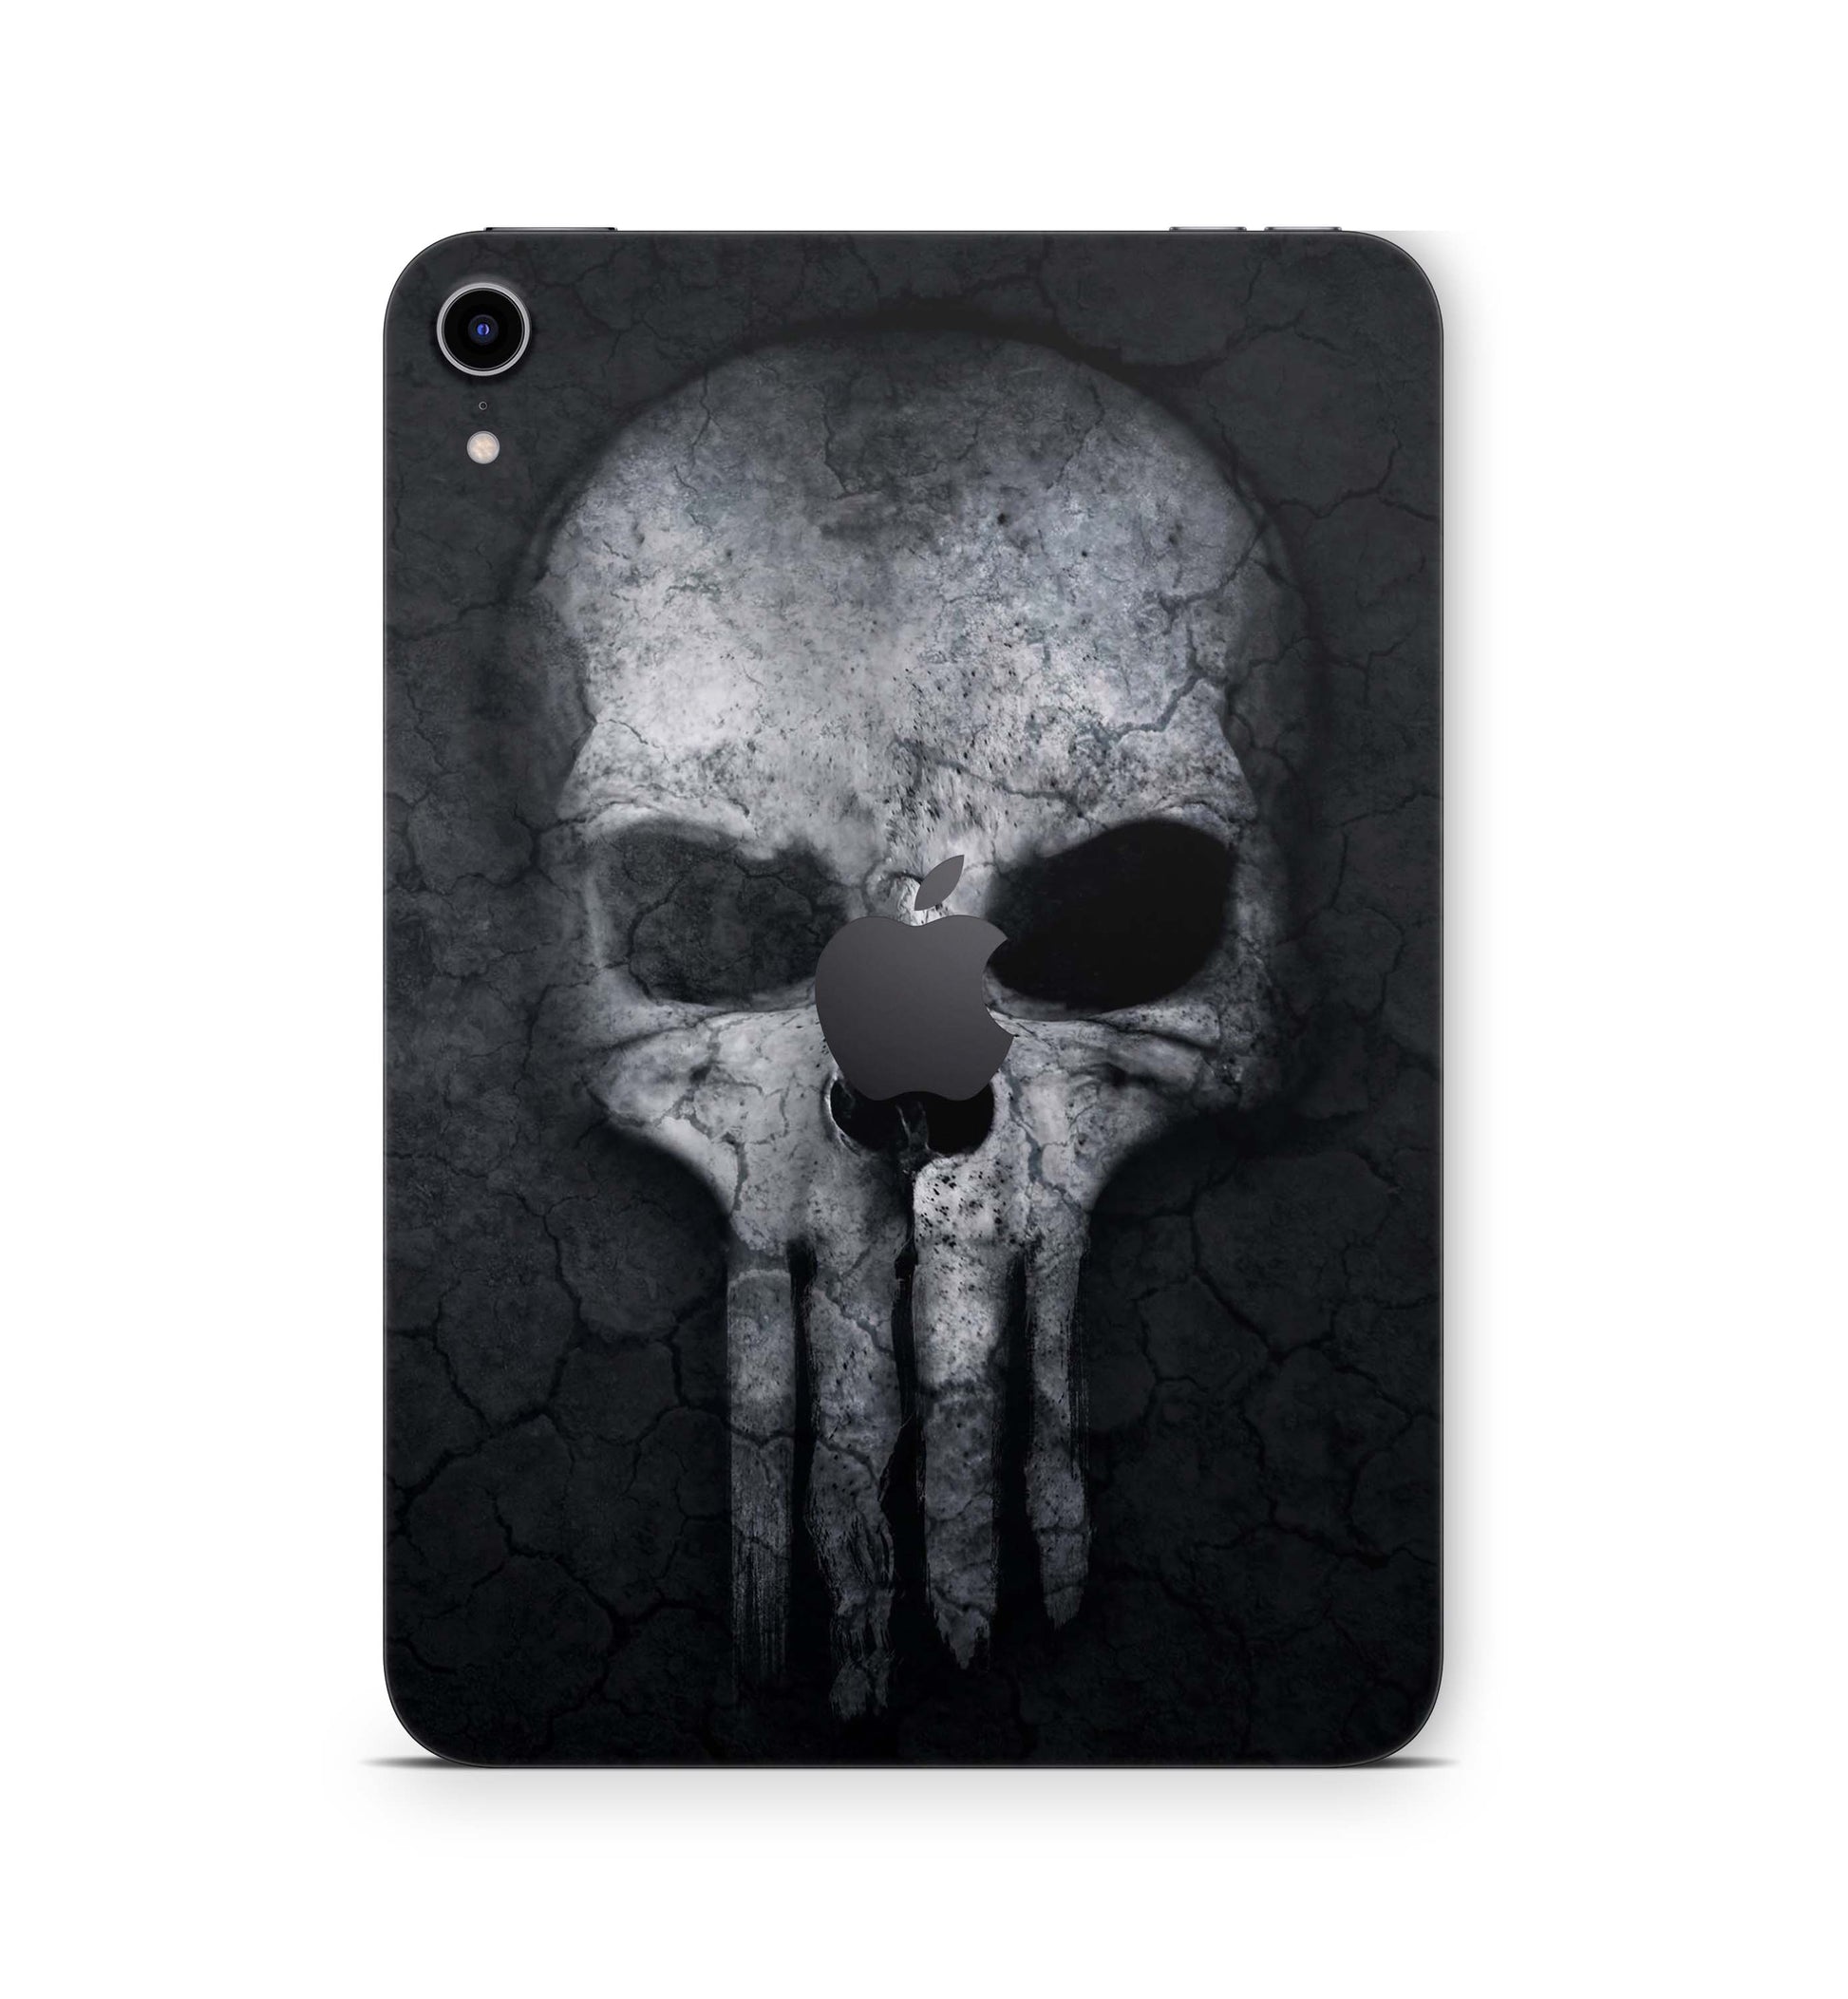 iPad Air Skin Design Cover Folie Vinyl Skins & Wraps für alle iPad Air Modelle Aufkleber Skins4u Hard-Skull  